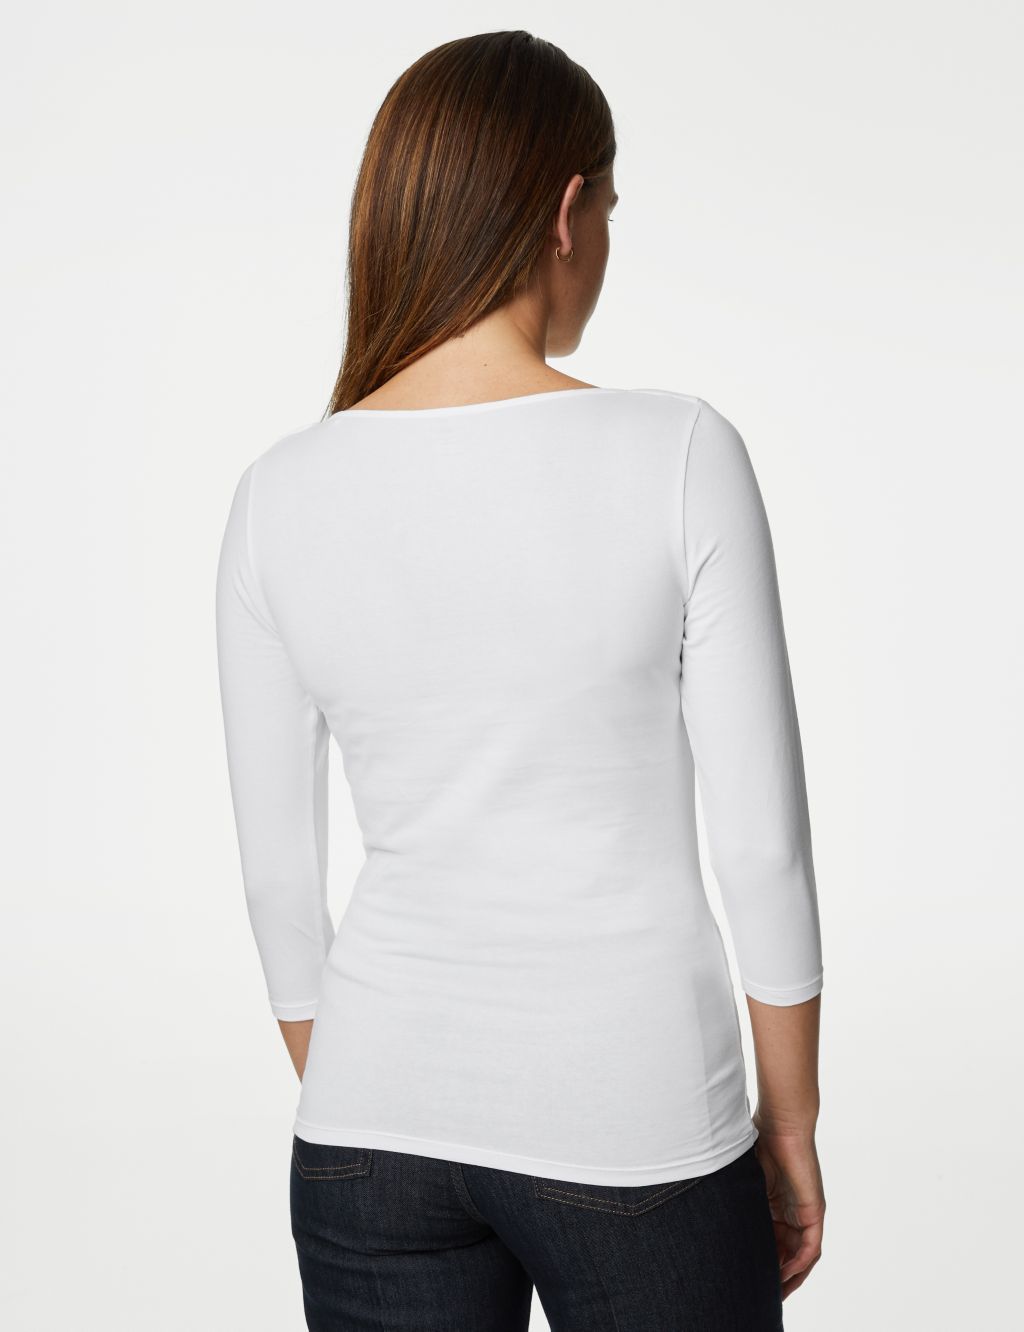 Cotton Rich Slim Fit 3/4 Sleeve T-Shirt image 5